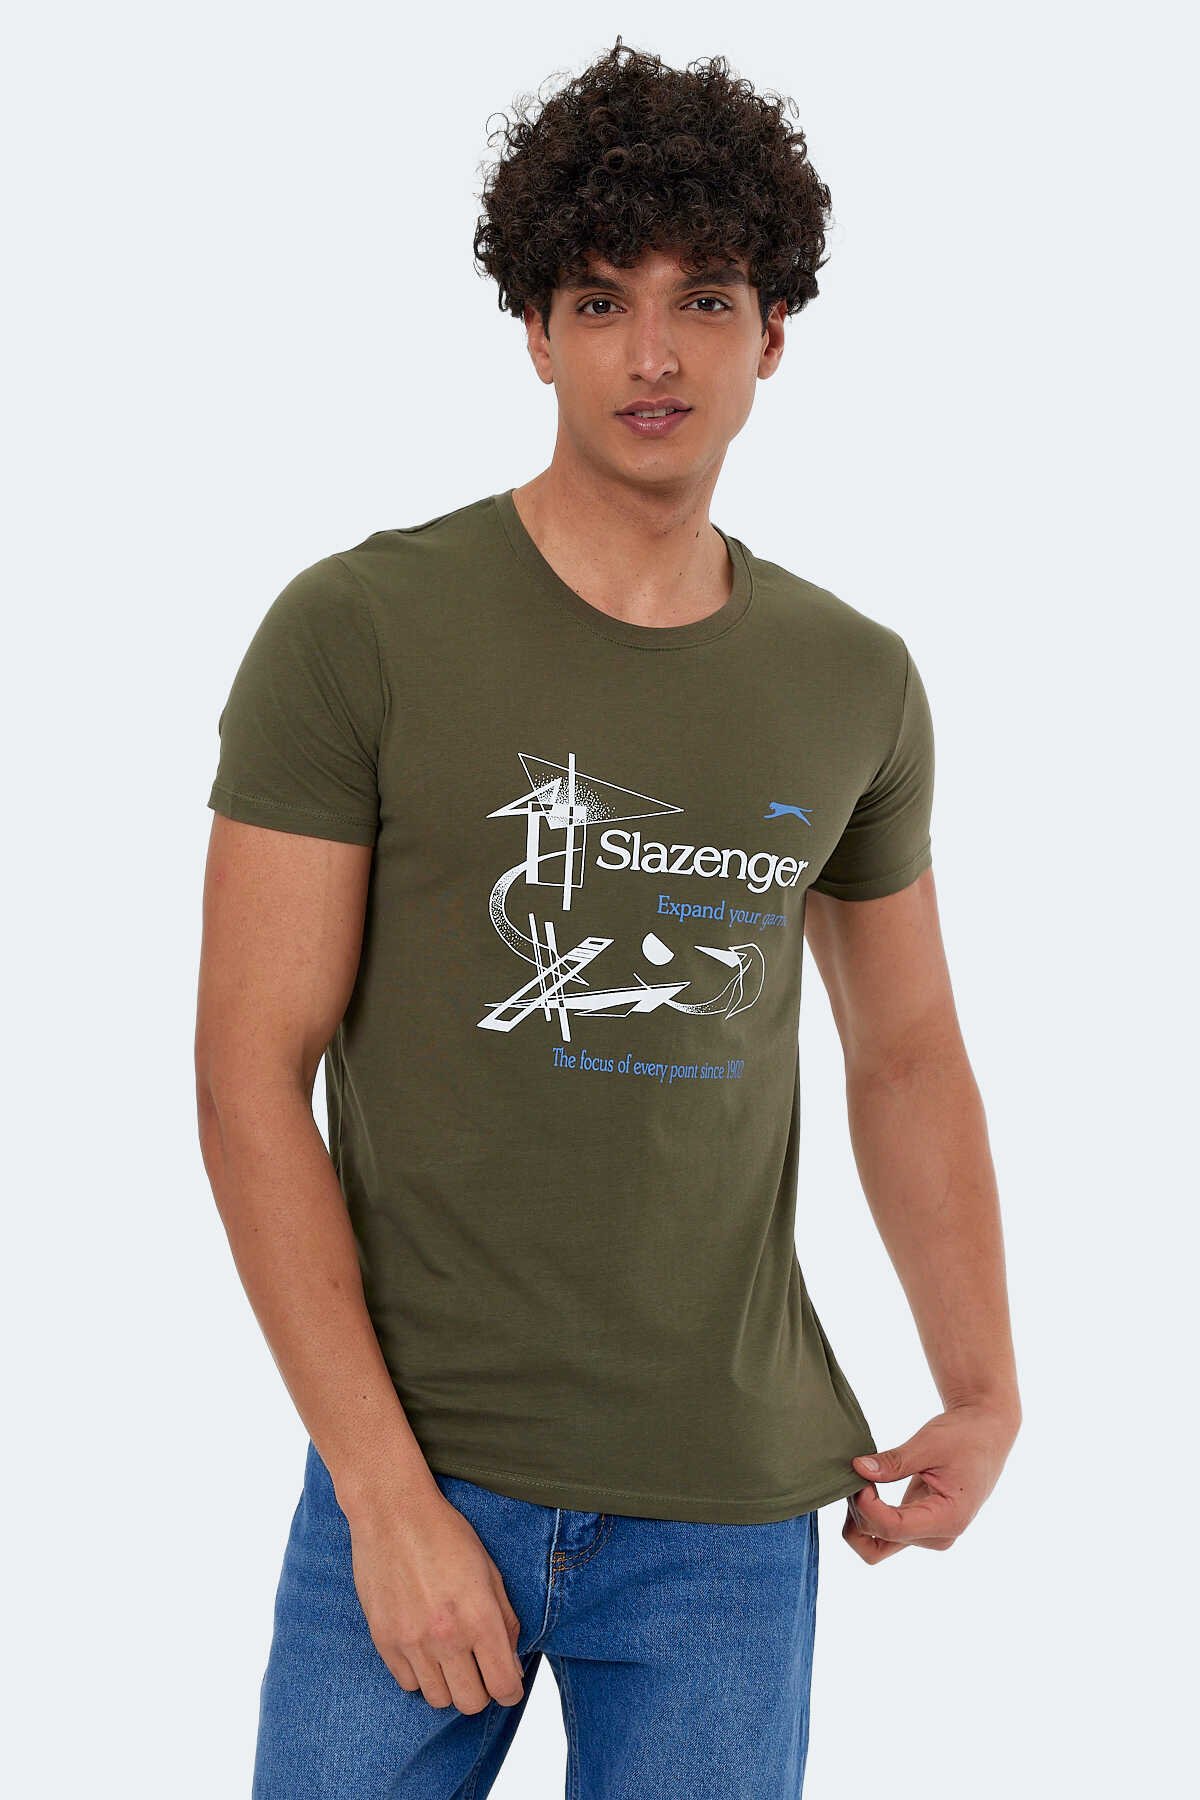 Slazenger KAREL Erkek Kısa Kol T-Shirt Haki